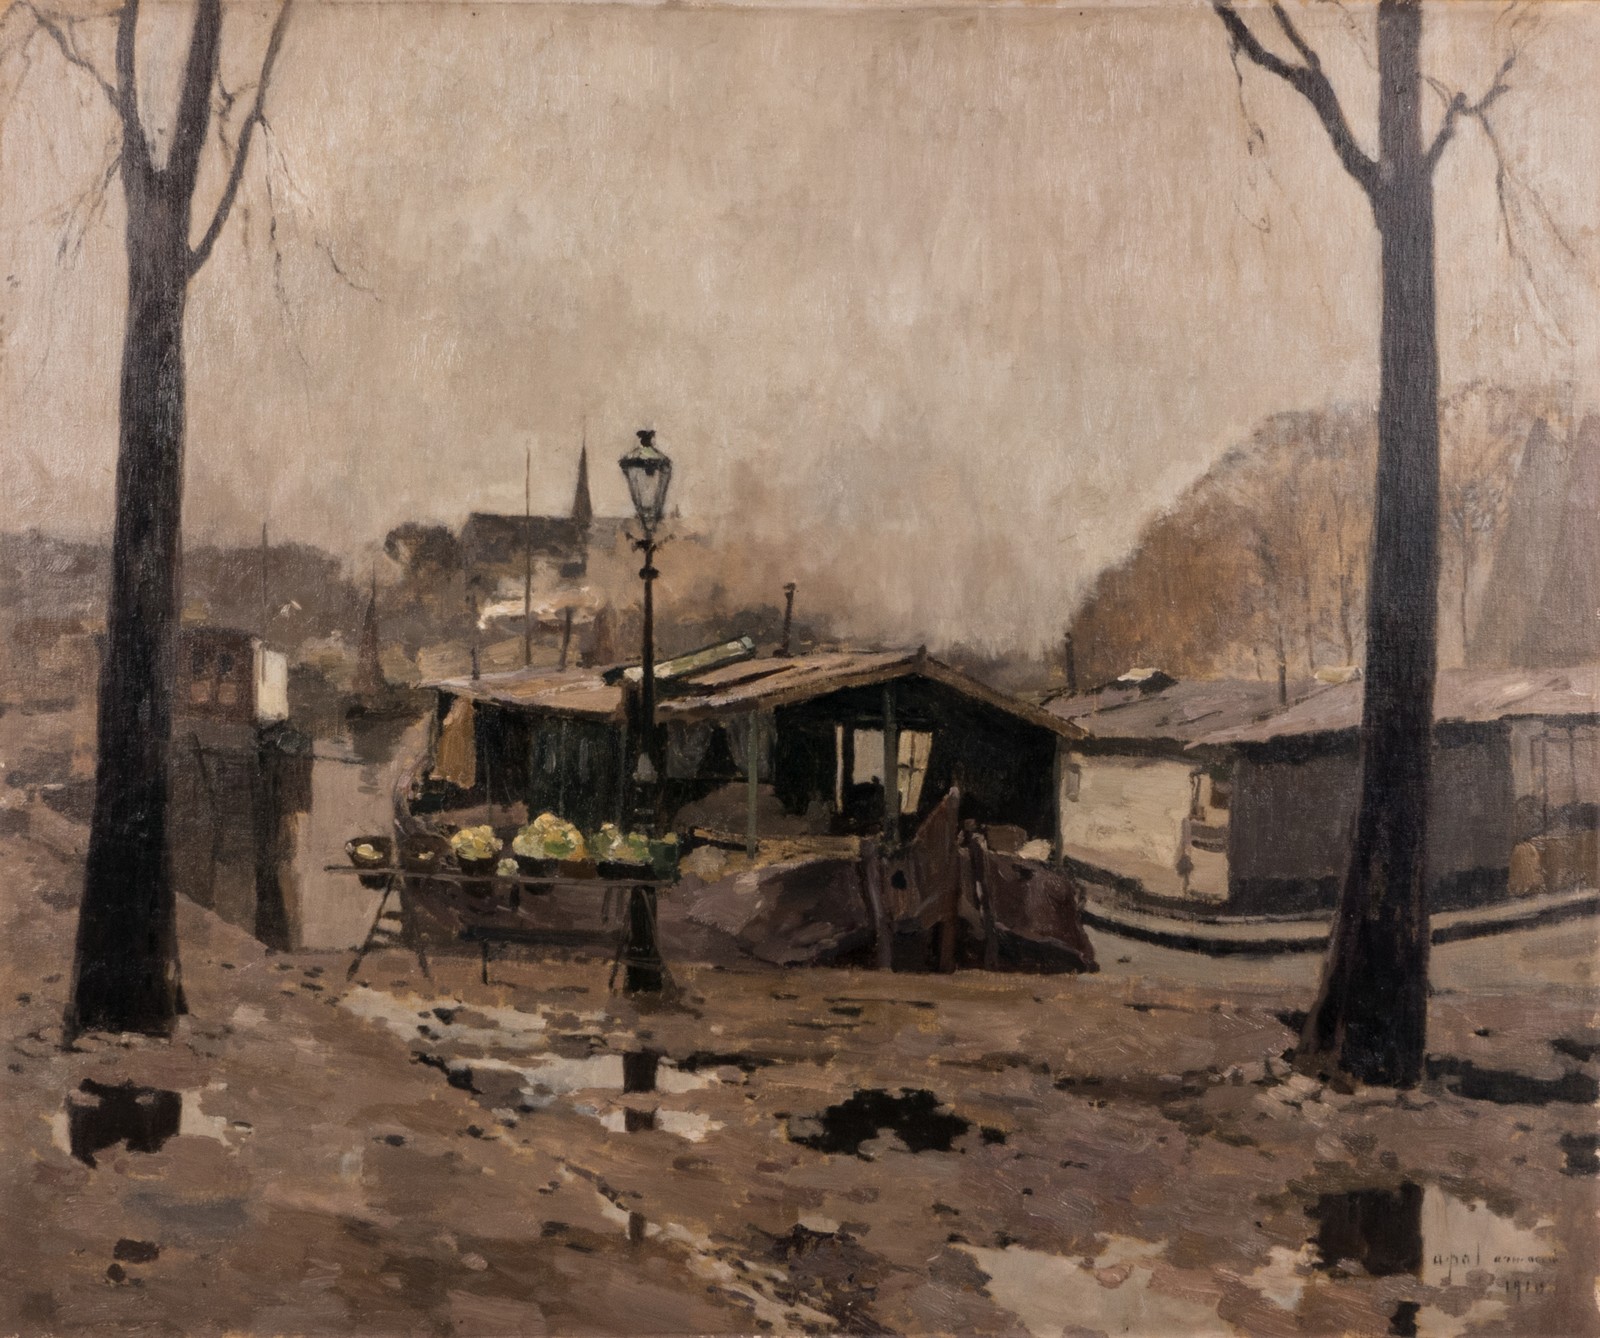 Apol A., view on a slum, oil on canvas, 100 x 120 cm